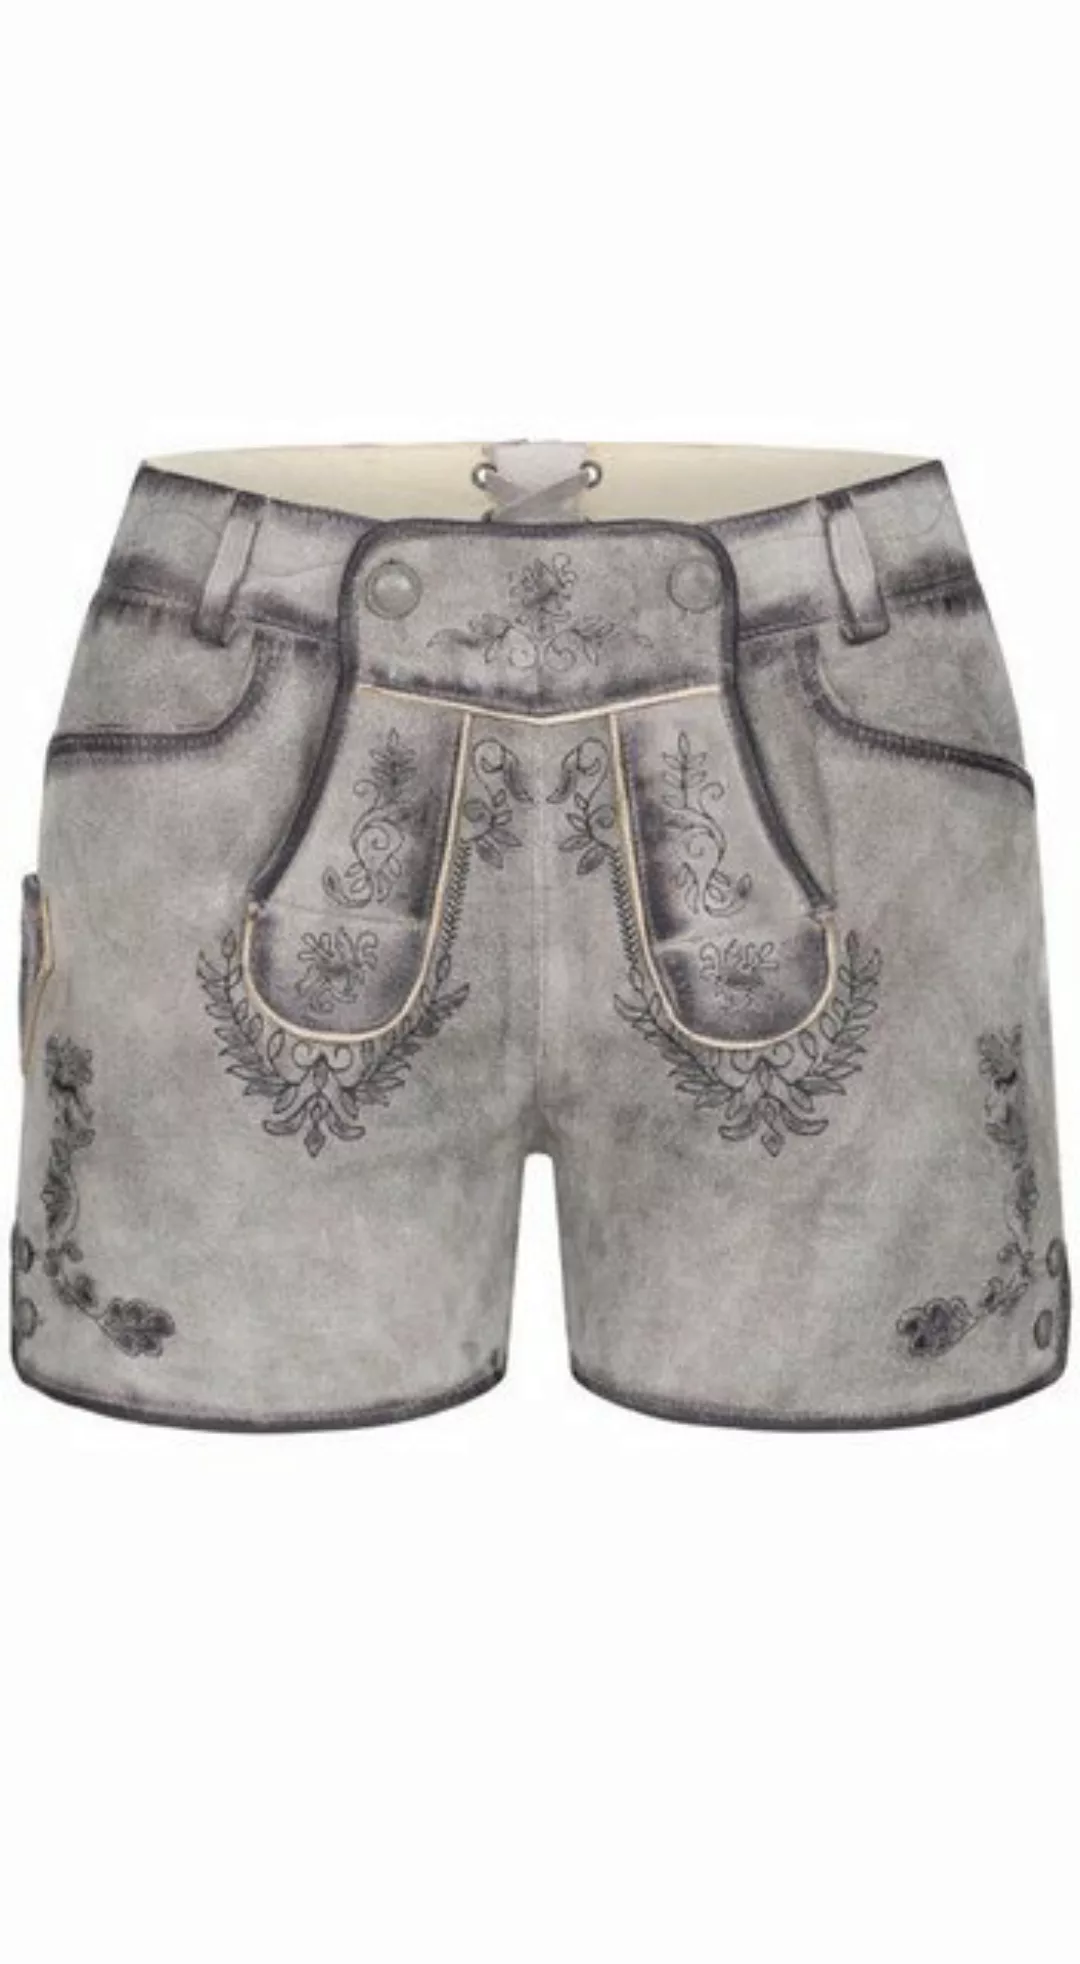 Nübler Trachtenlederhose Lederhose Hotpant Tiana in Silber von Nübler günstig online kaufen